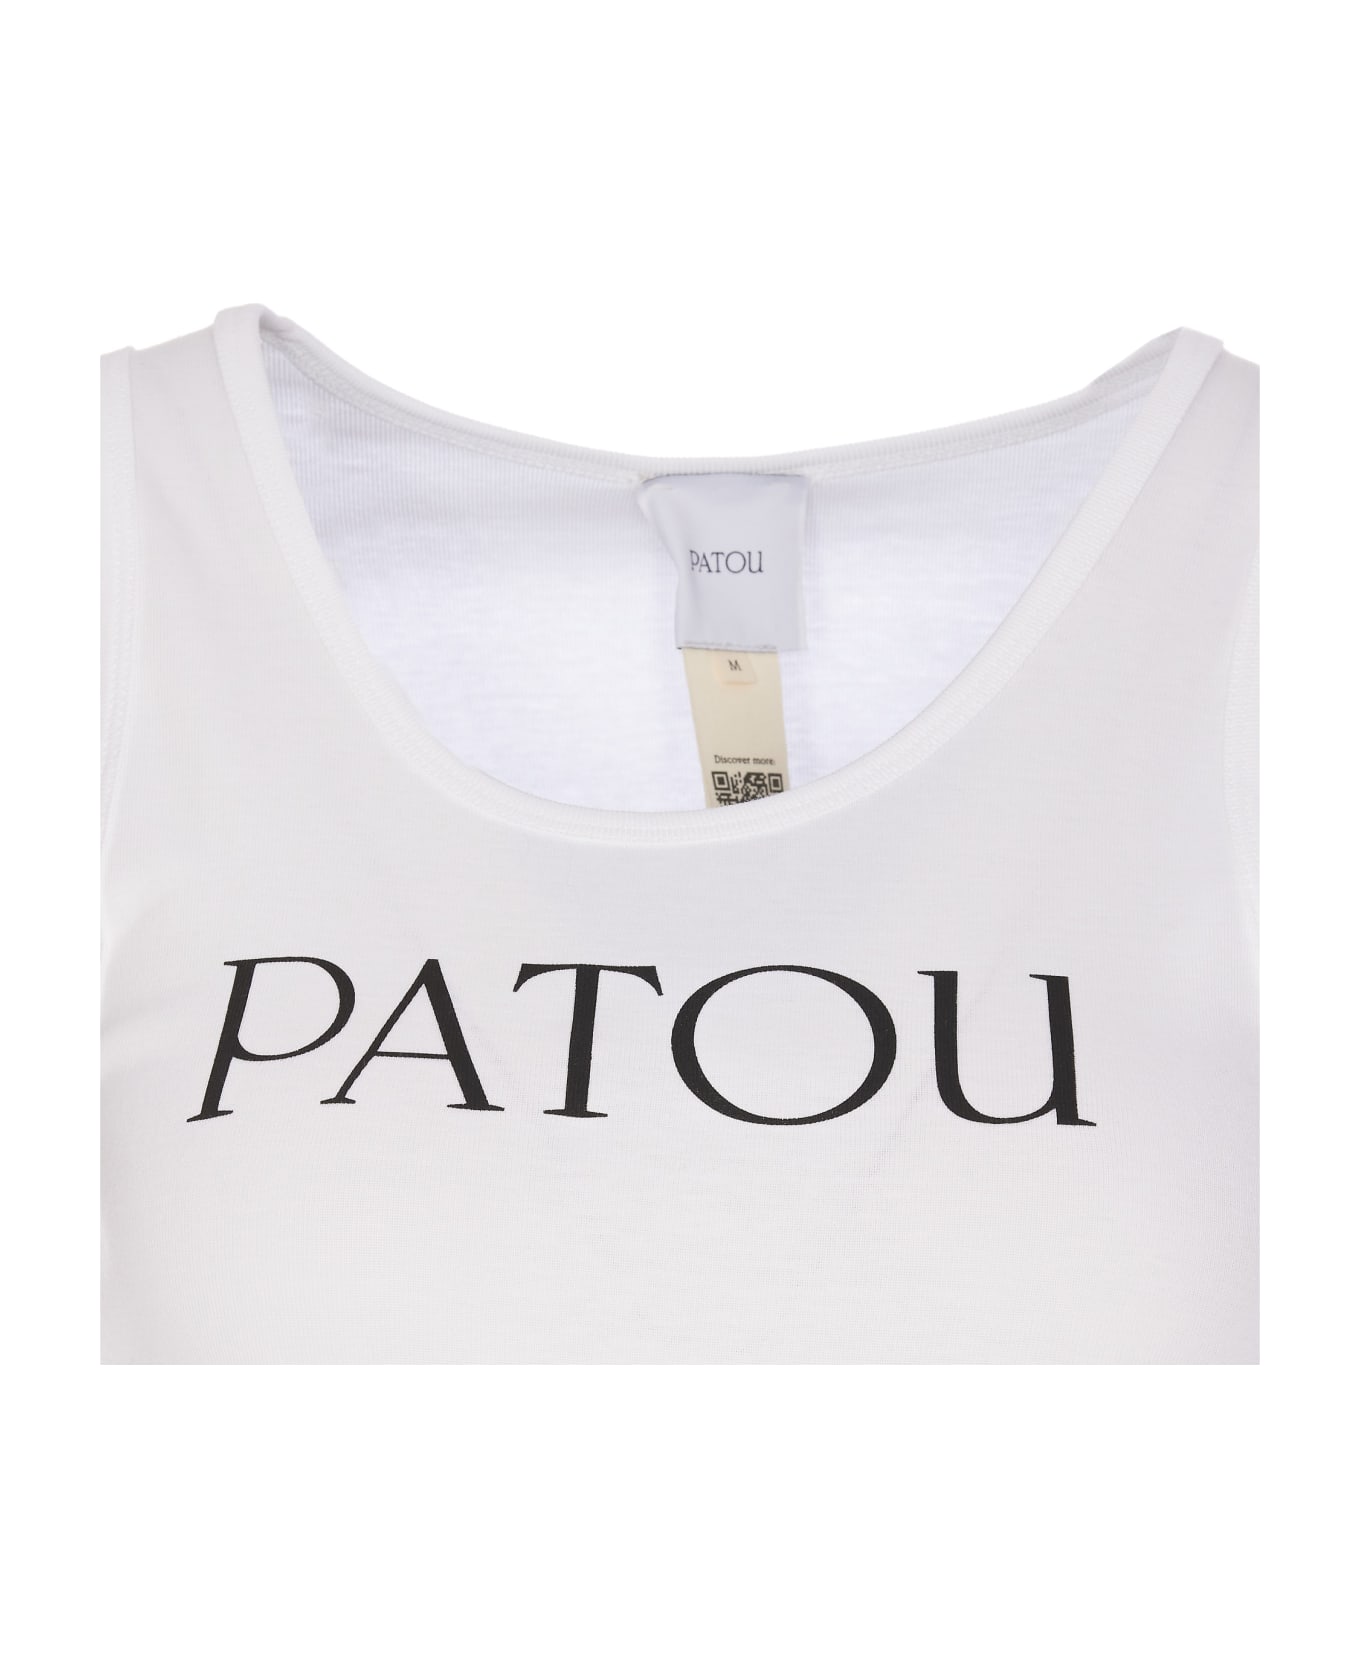 Patou Iconic Tank Top - WHITE